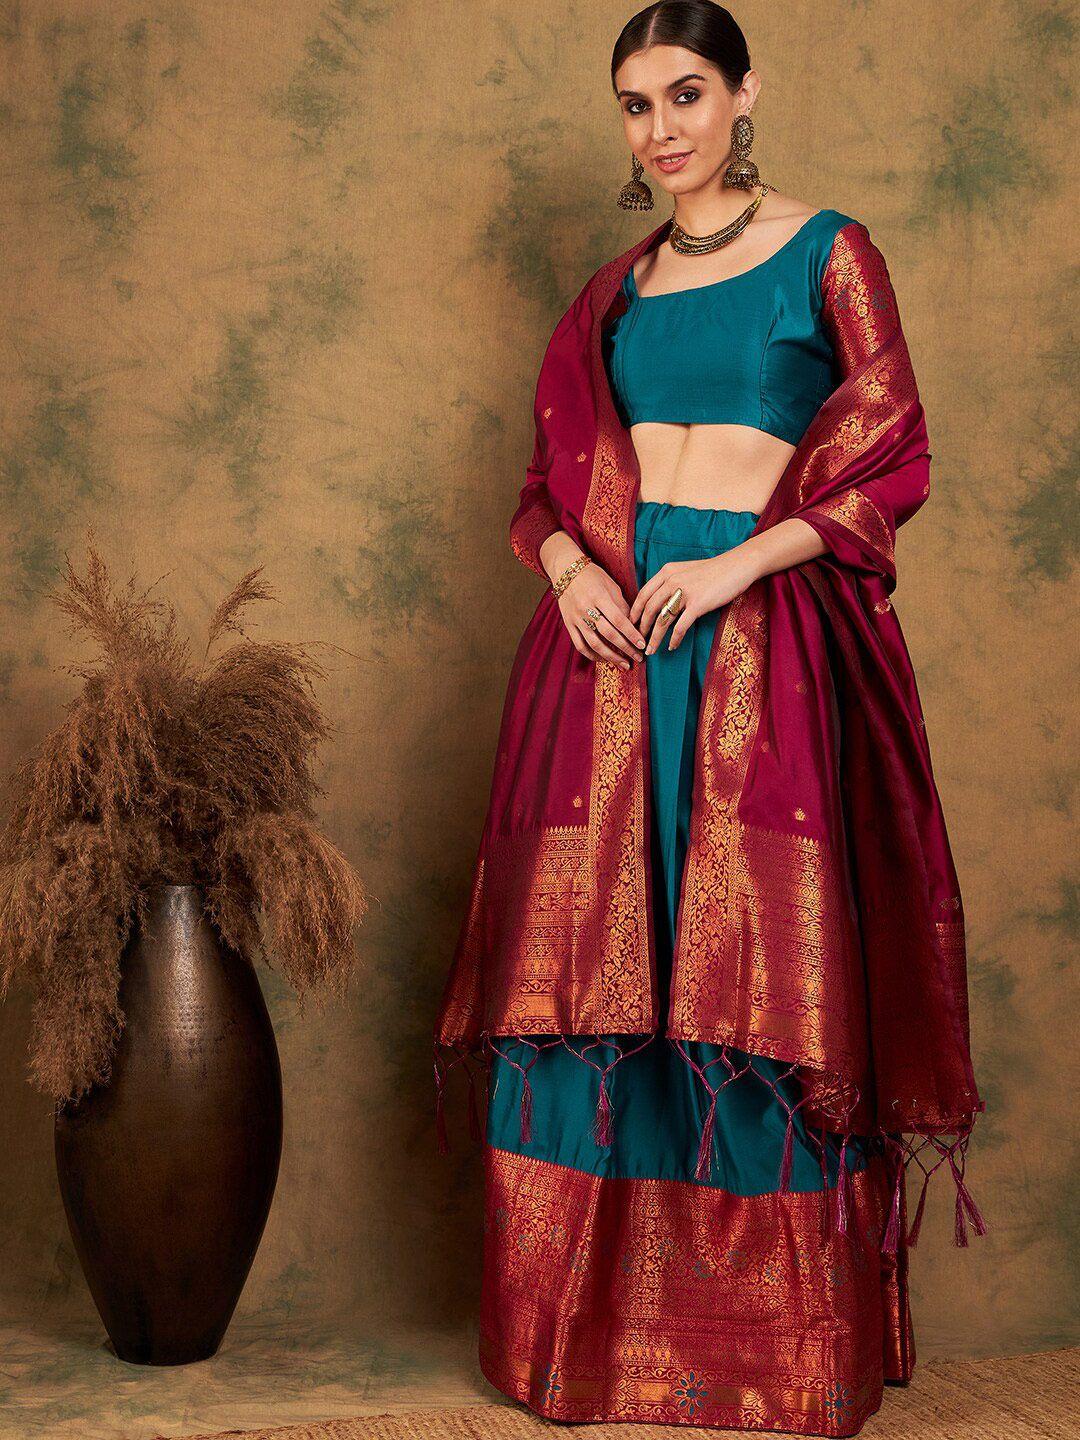 sangria woven-designed semi-stitched lehenga & unstitched blouse with dupatta